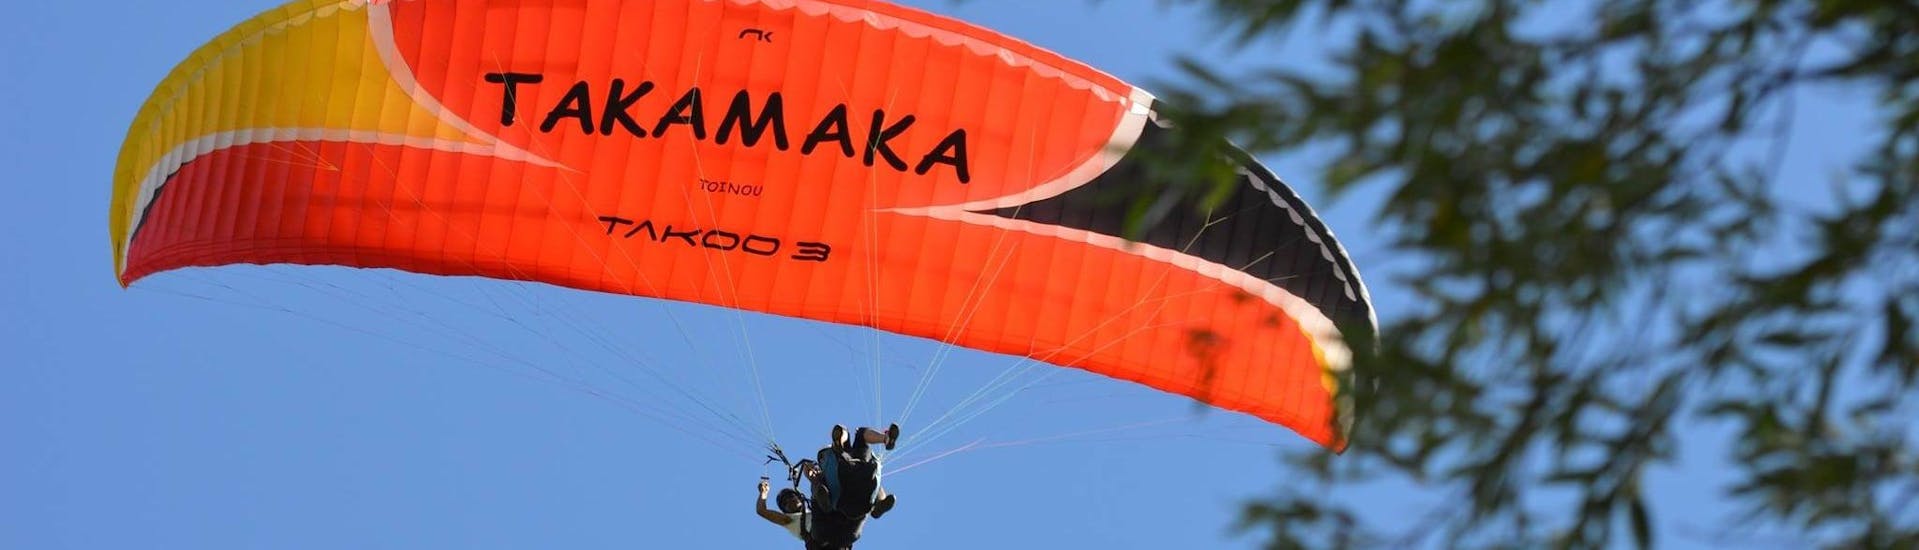 tandem-paragliding-sensation-aix-les-bains-takamaka-aix-les-bains-hero